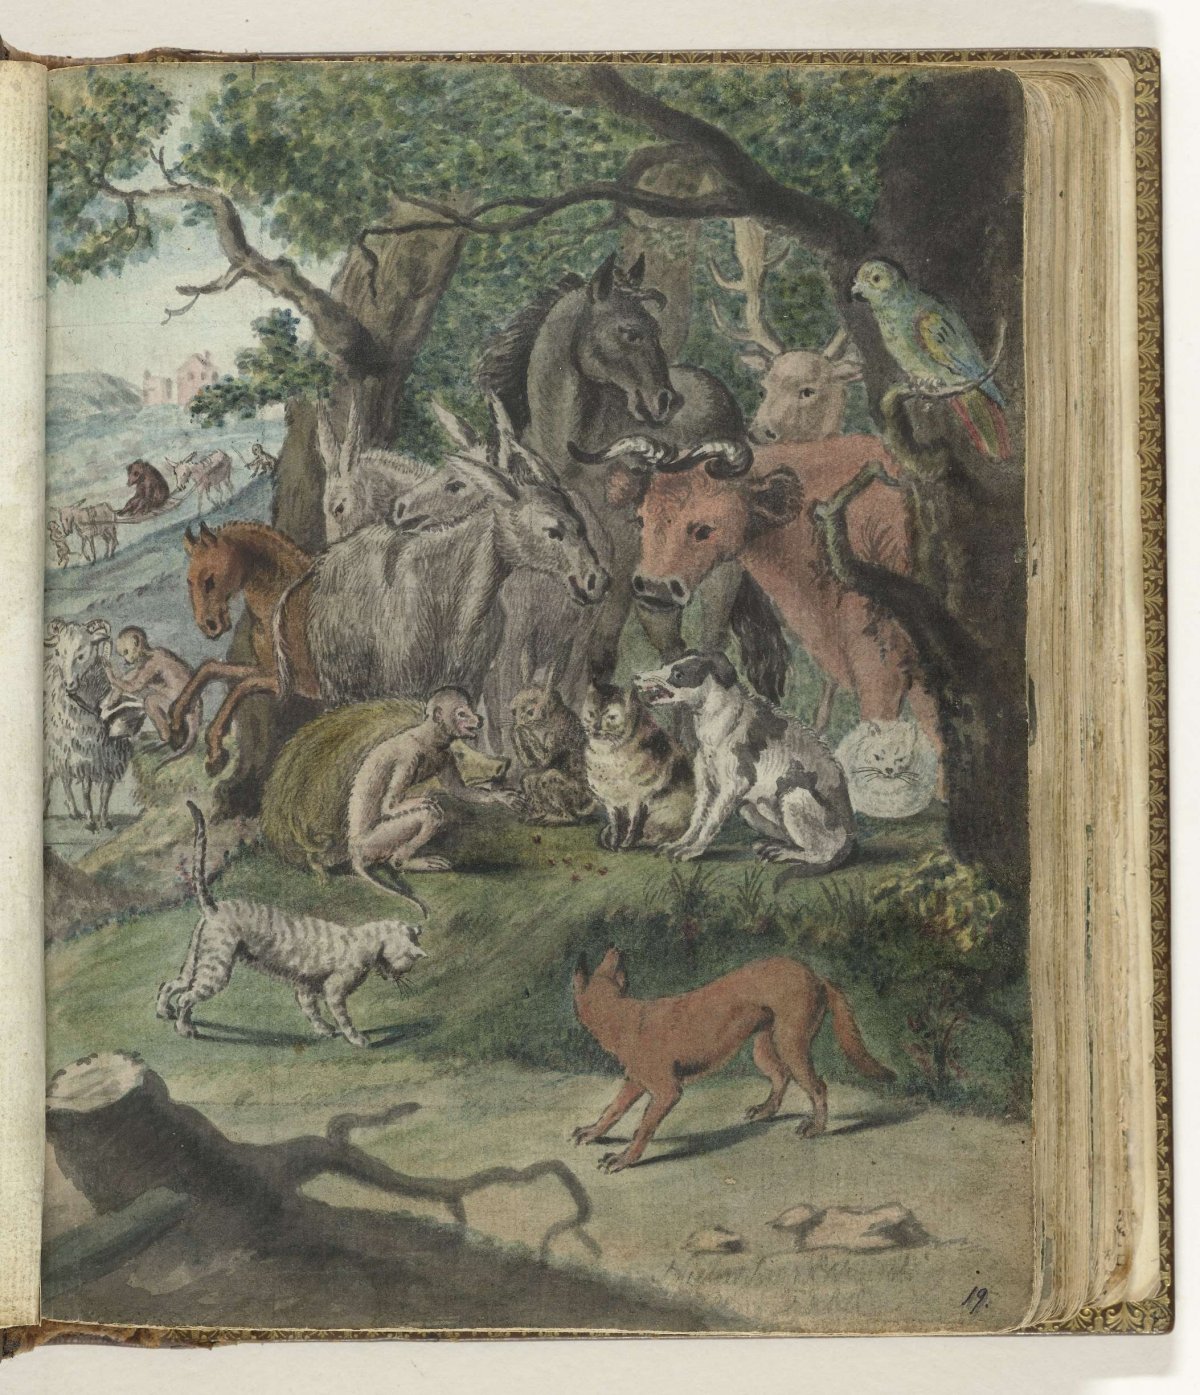 Dobbelende dieren., Jan Brandes, 1770 - 1808